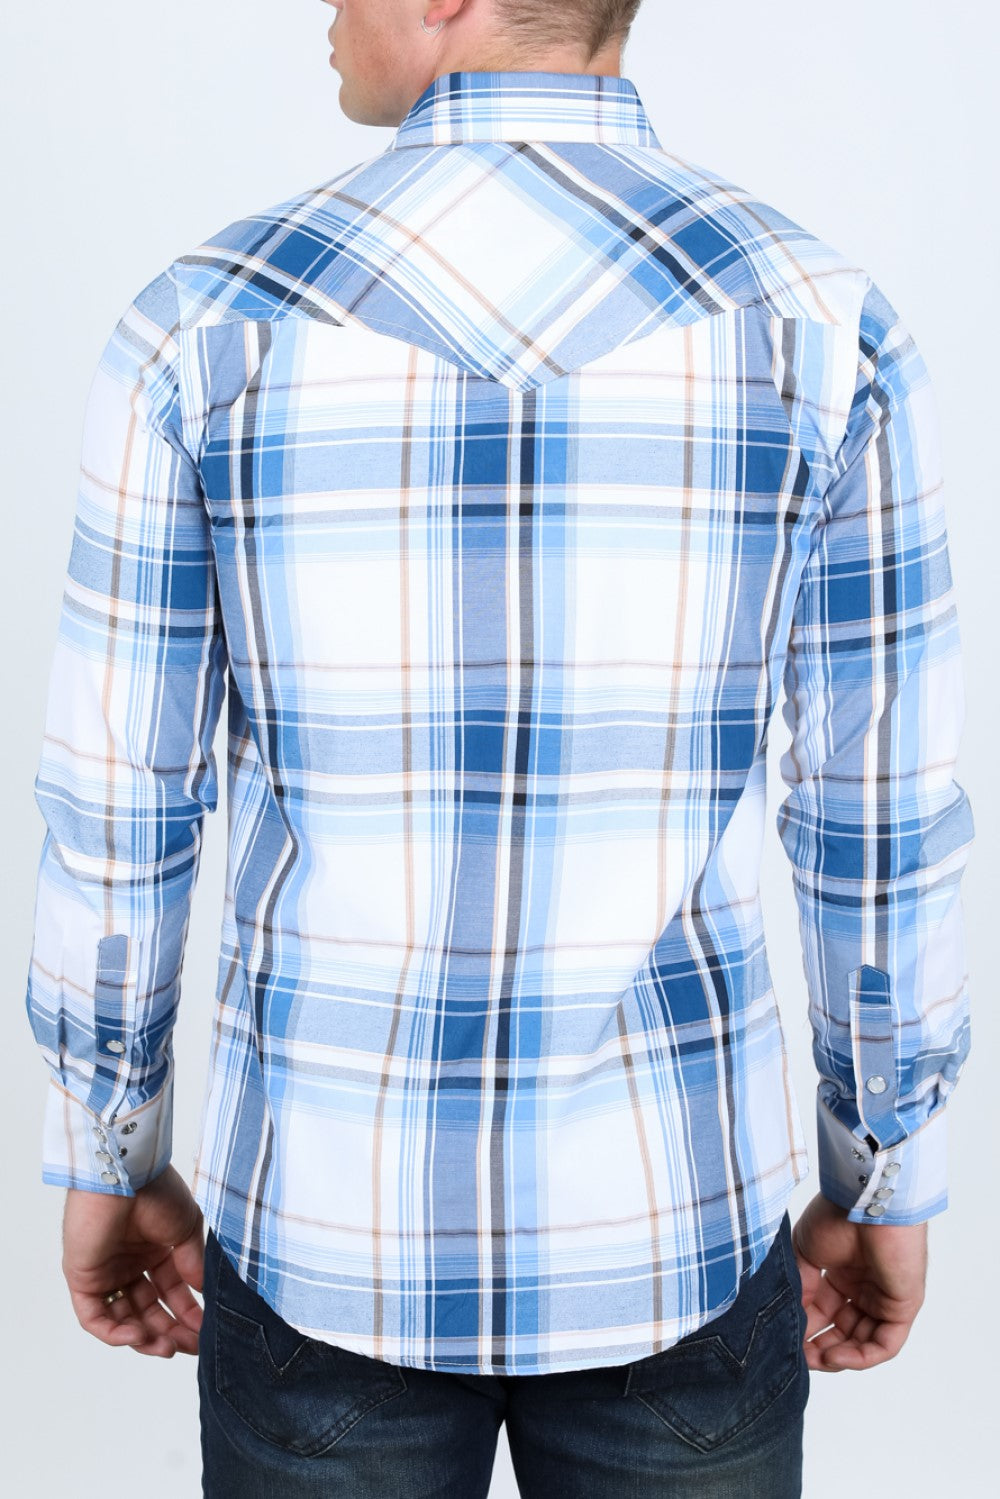 Camisa de Cuadros Azul MC-200-53 - Camisas Vaqueras de Manga Larga para Hombre - Camisas Vaqueras Azul (2)